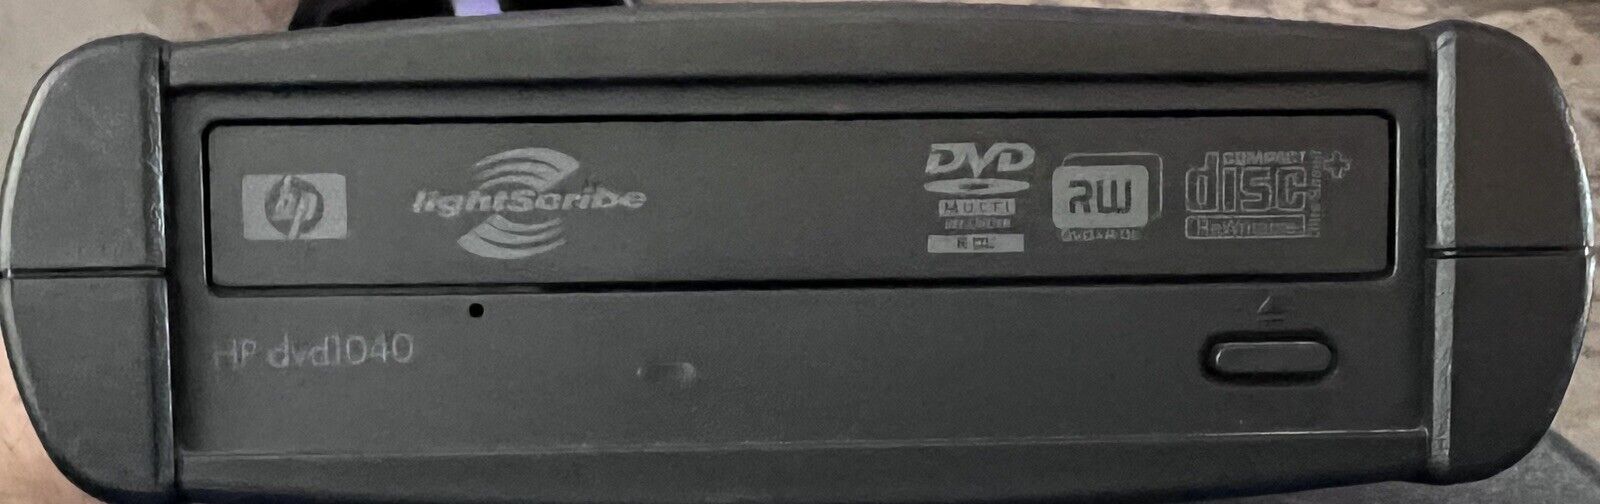 HP dvd1040 External Super Multi DVD Writer LightScribe Dual Layer Drive Disc